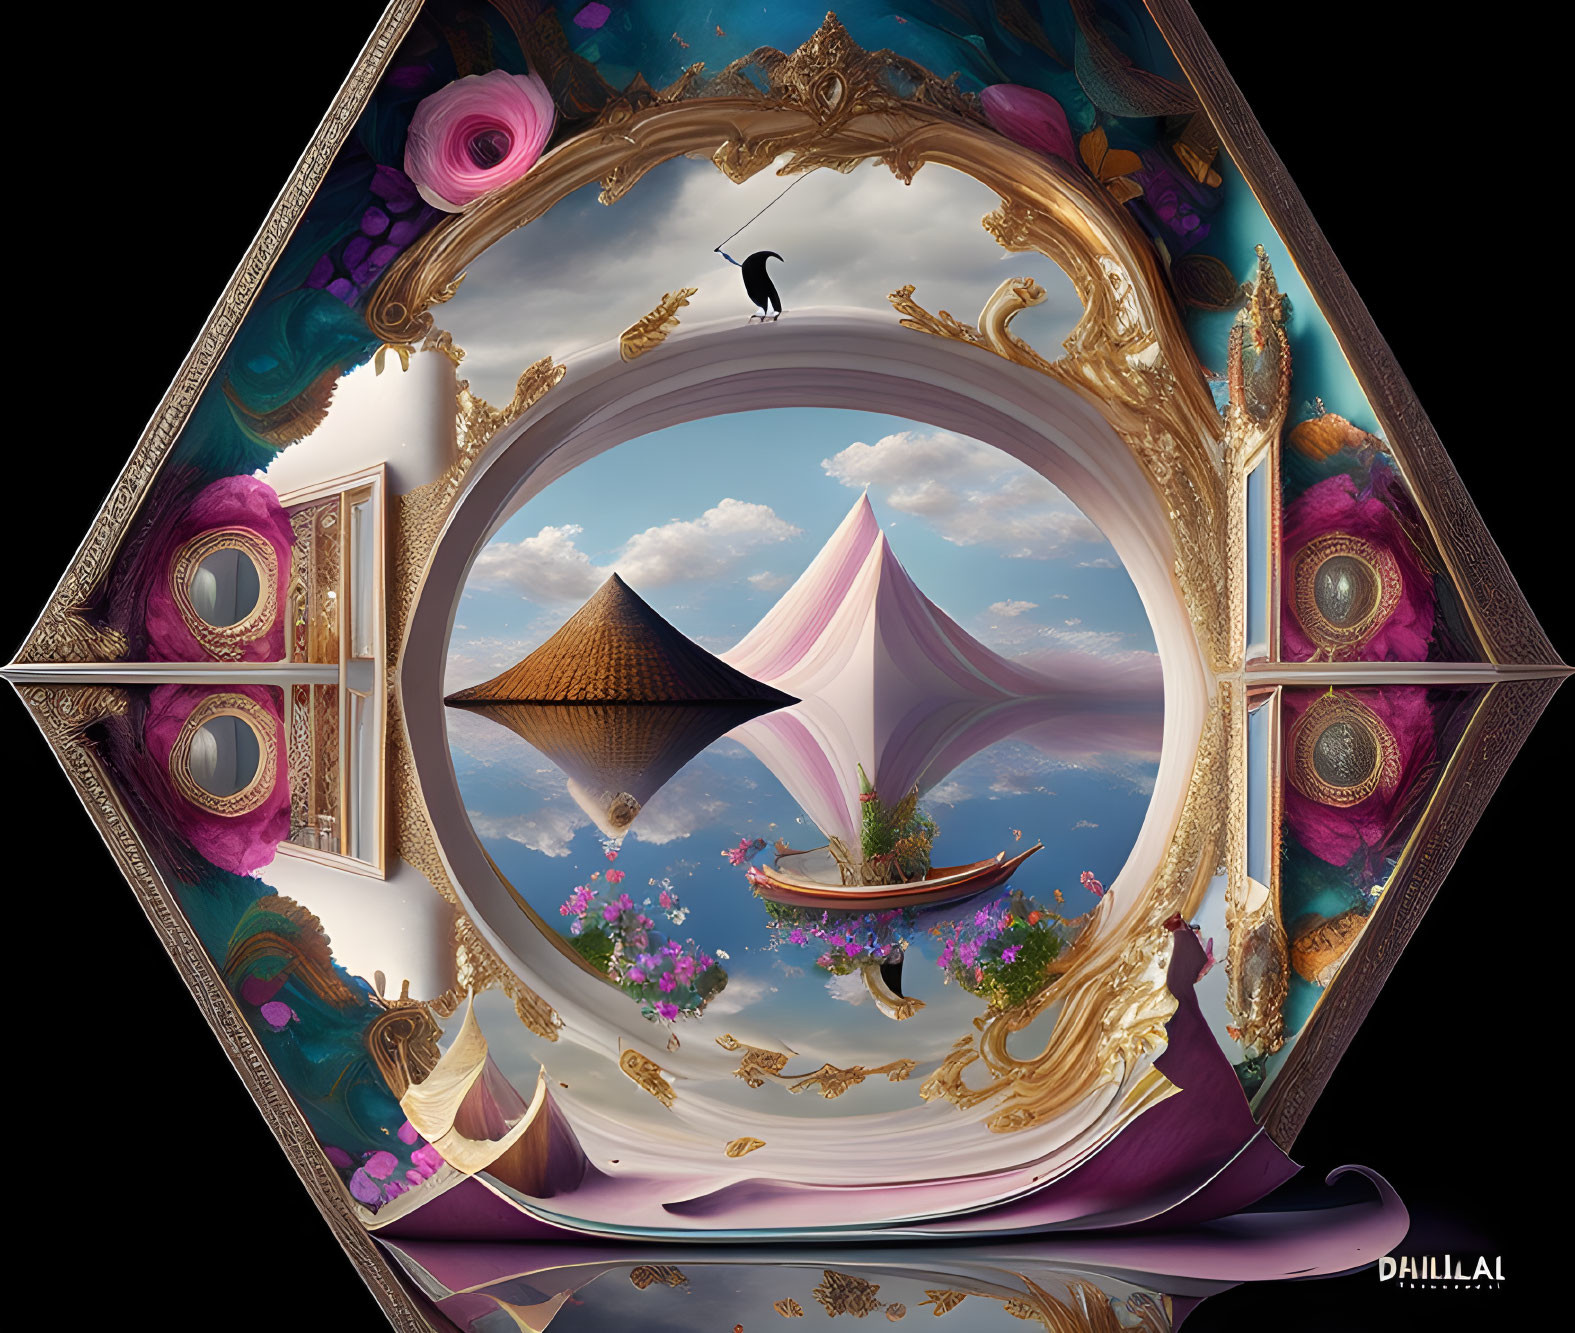 Surreal digital artwork: boat between mirrored worlds, ornate frames, vibrant colors